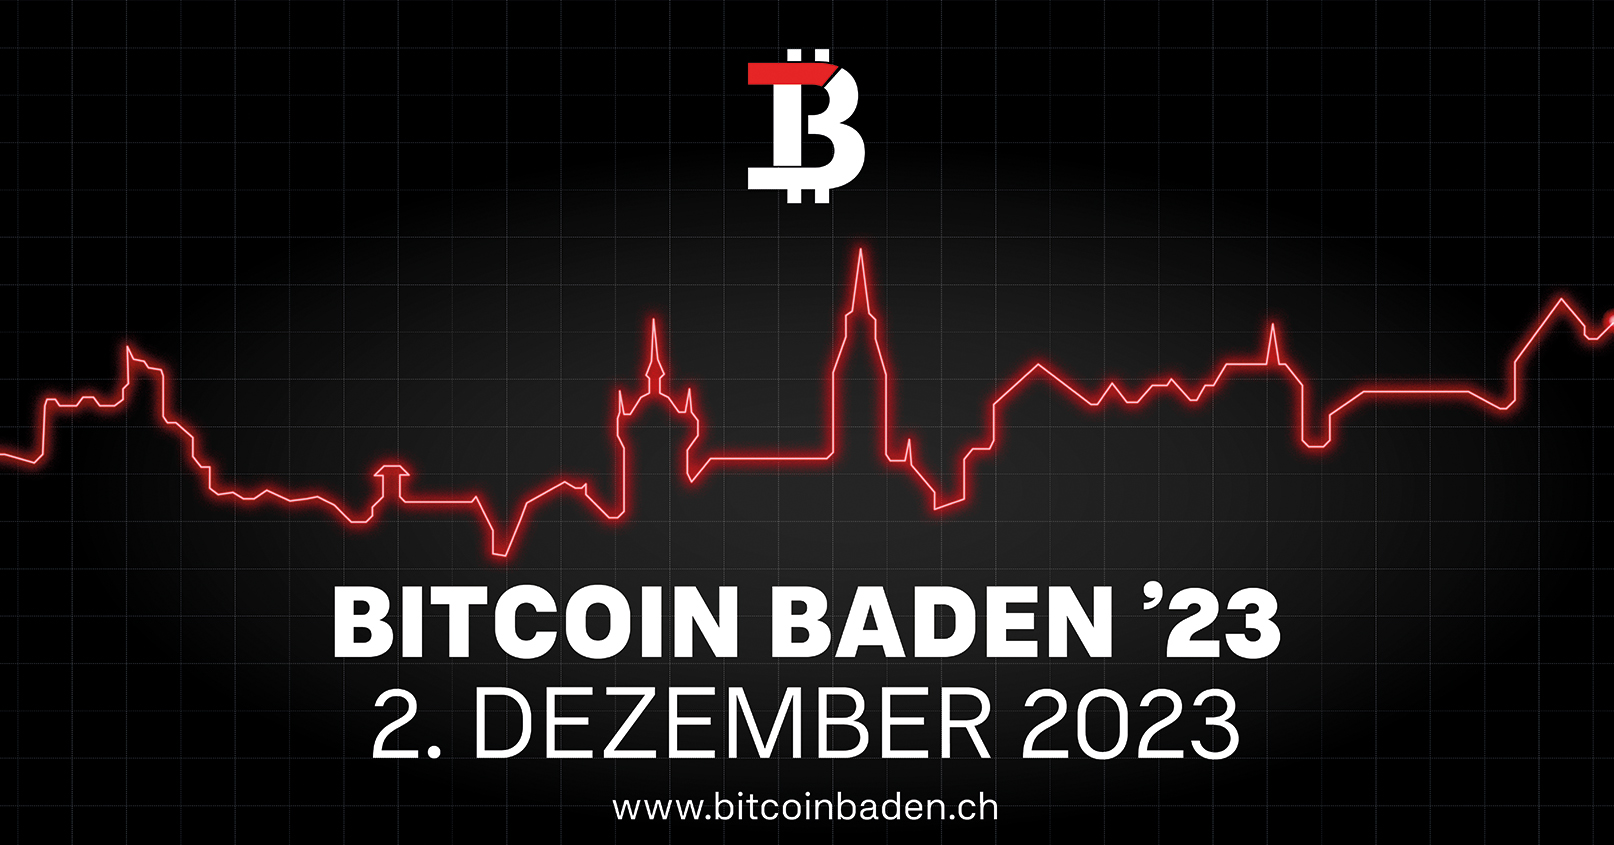 (c) Bitcoinbaden.ch